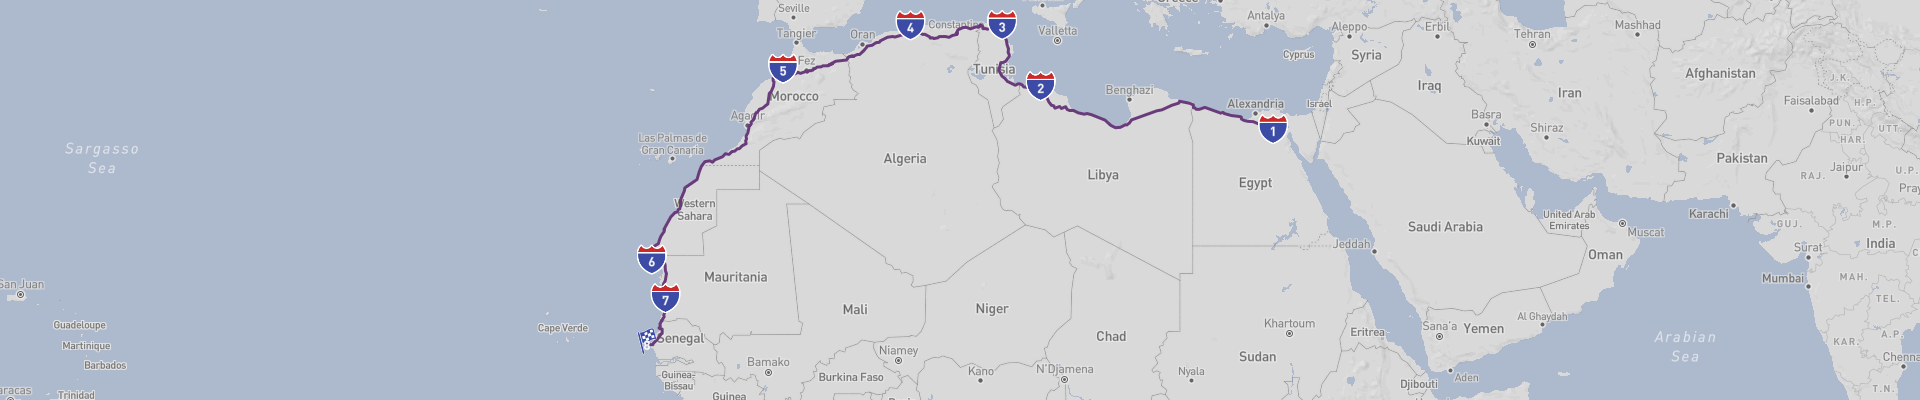 Cairo to Dakar Trans-African Road Trip